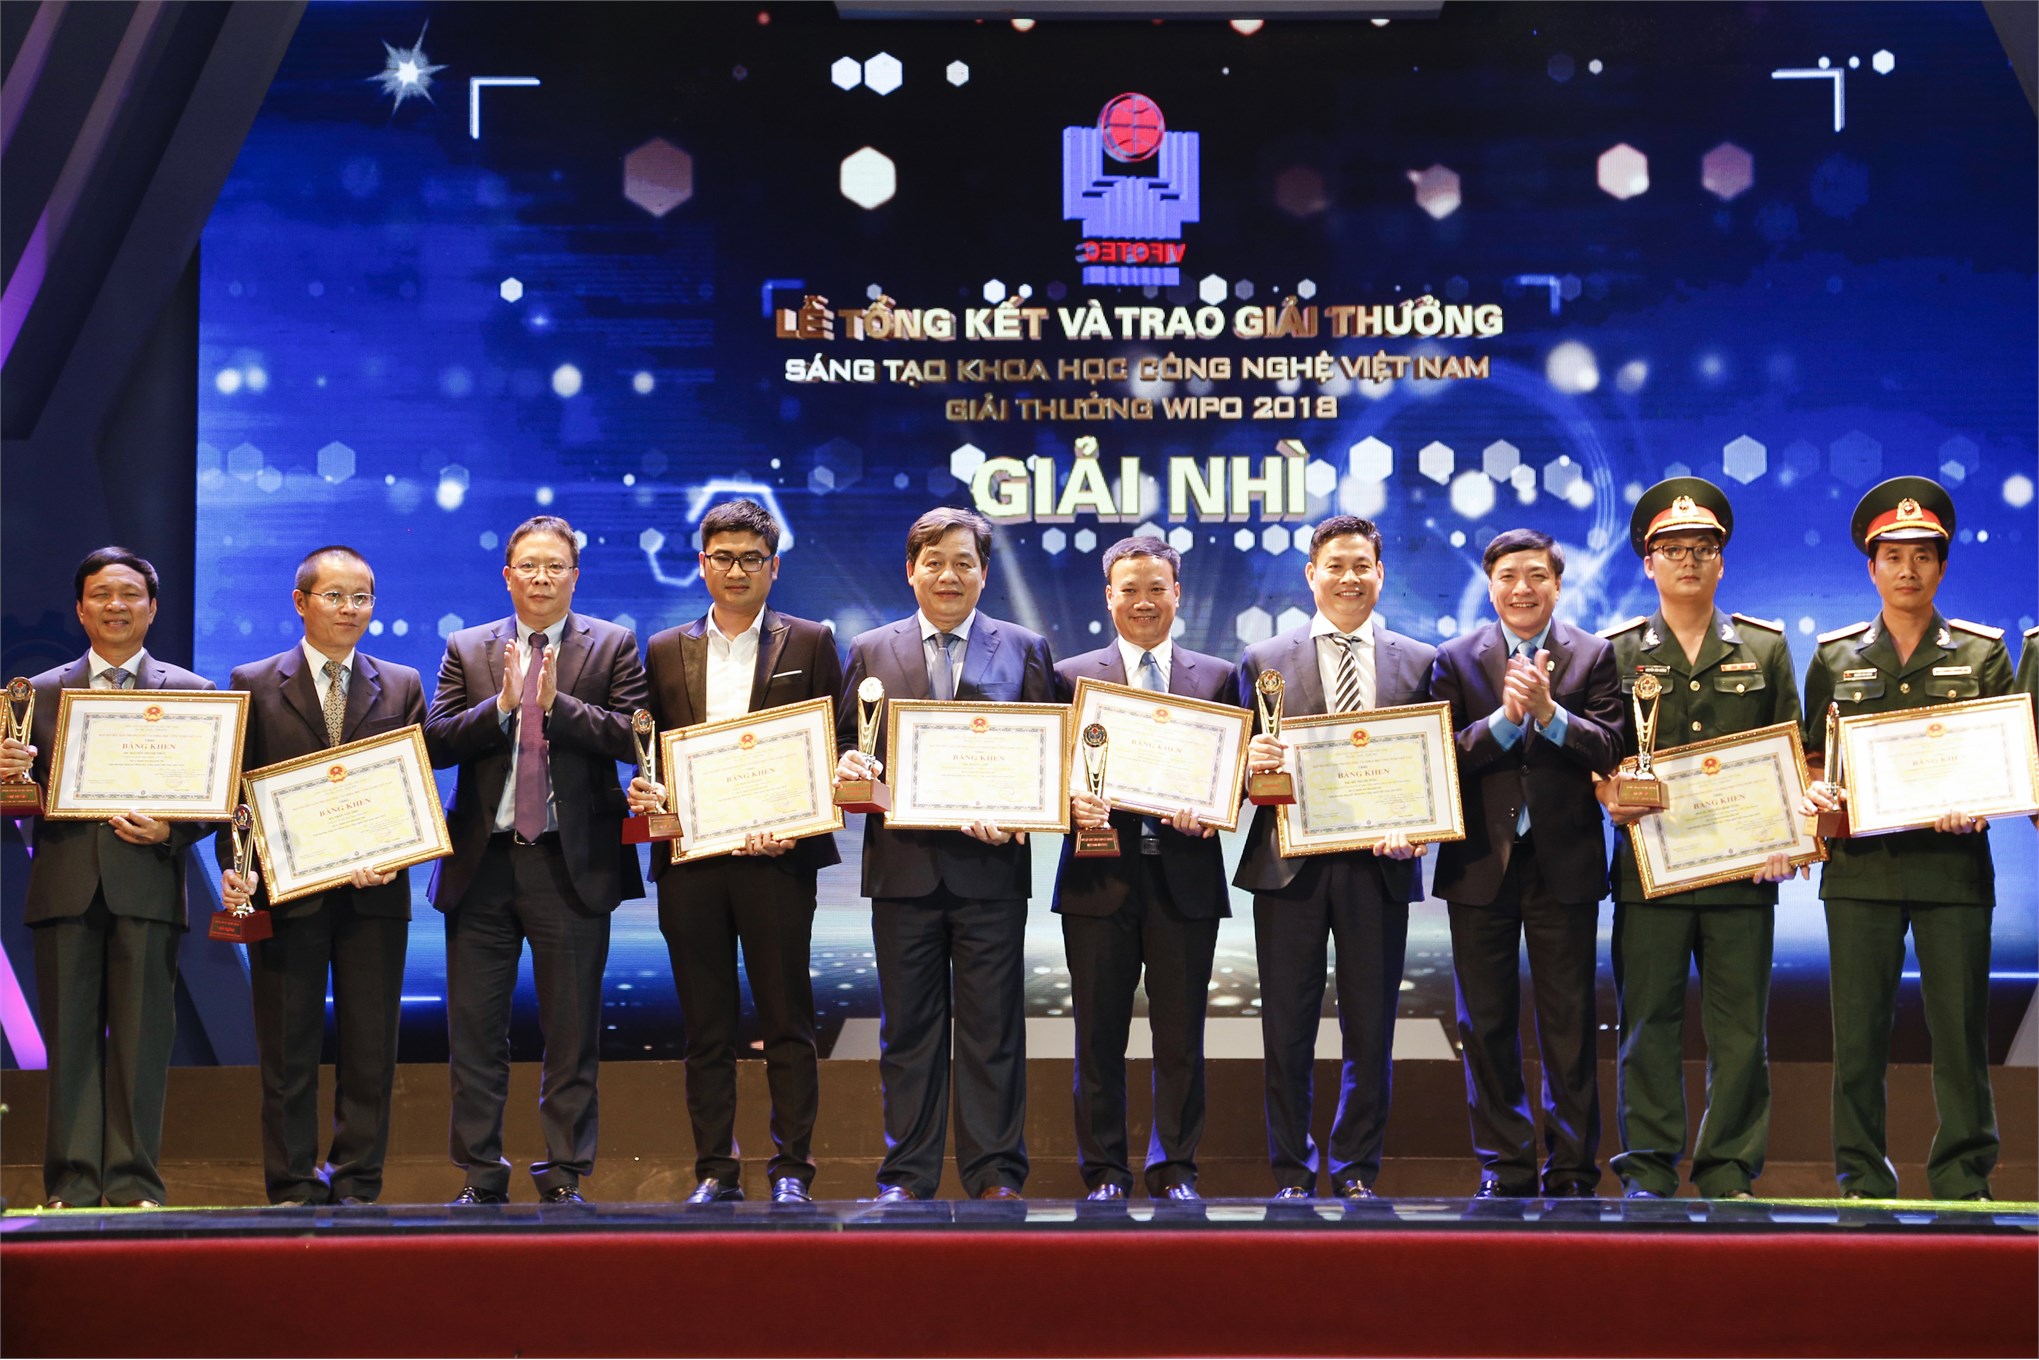 Hanoi University of Industry succeeds with the e-university model, towards building a smart university